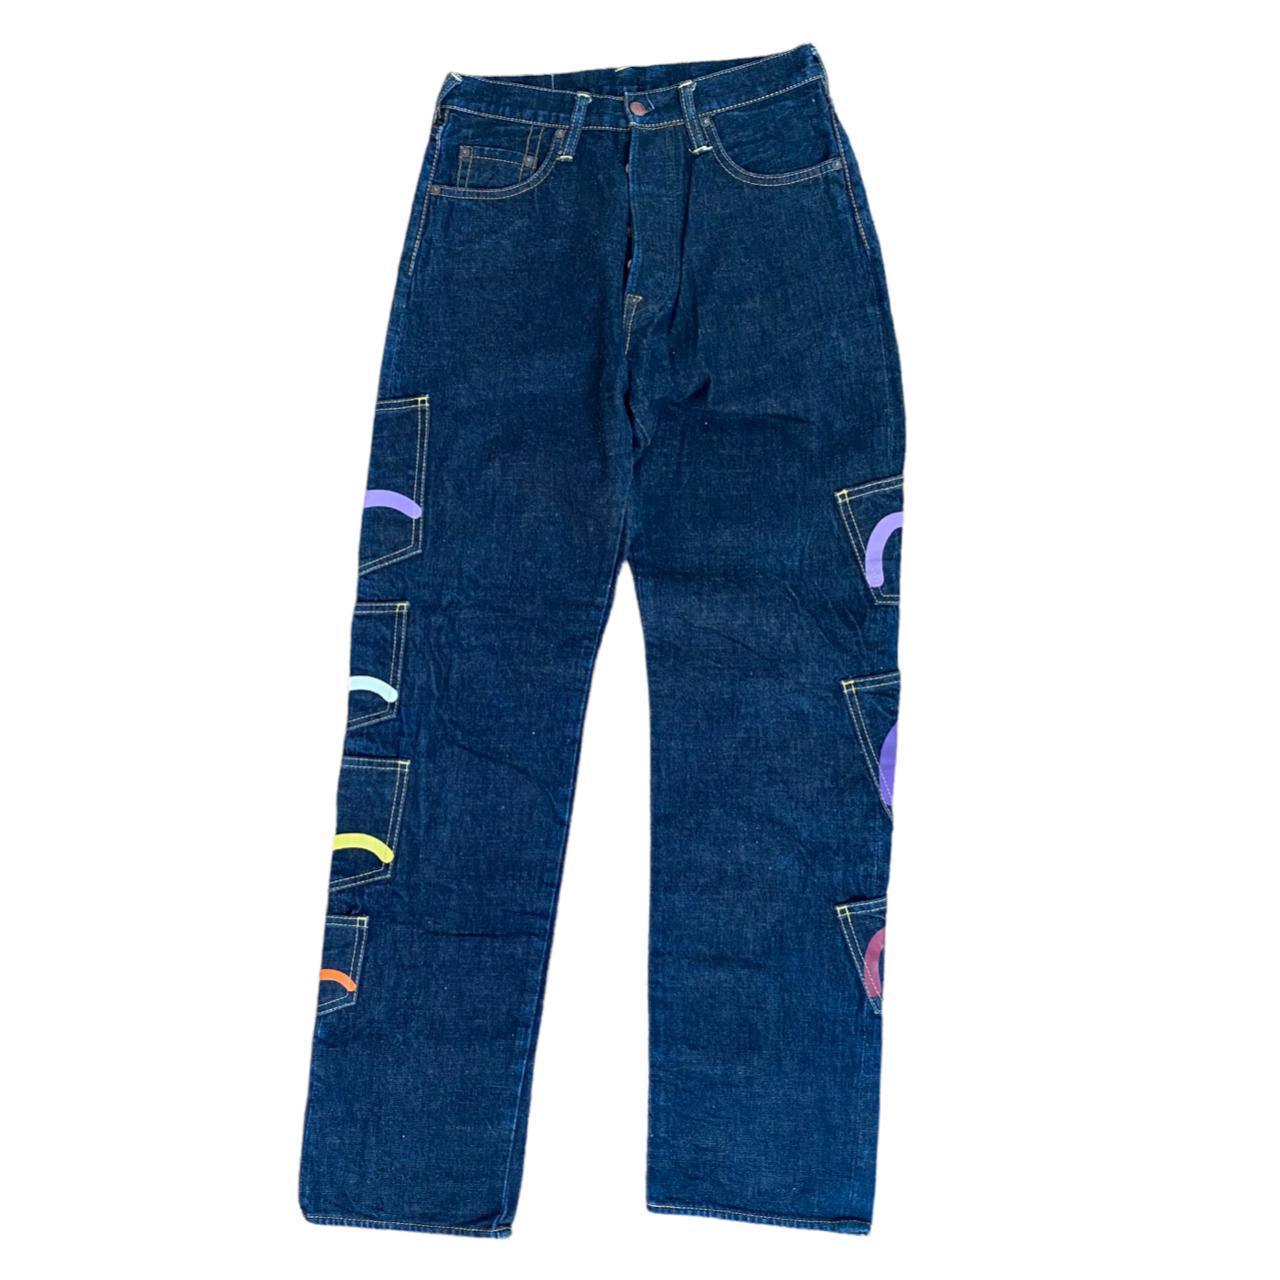 Evisu Multi Pocket Rainbow Denim Jeans - Paris Edition (30) - Known Source